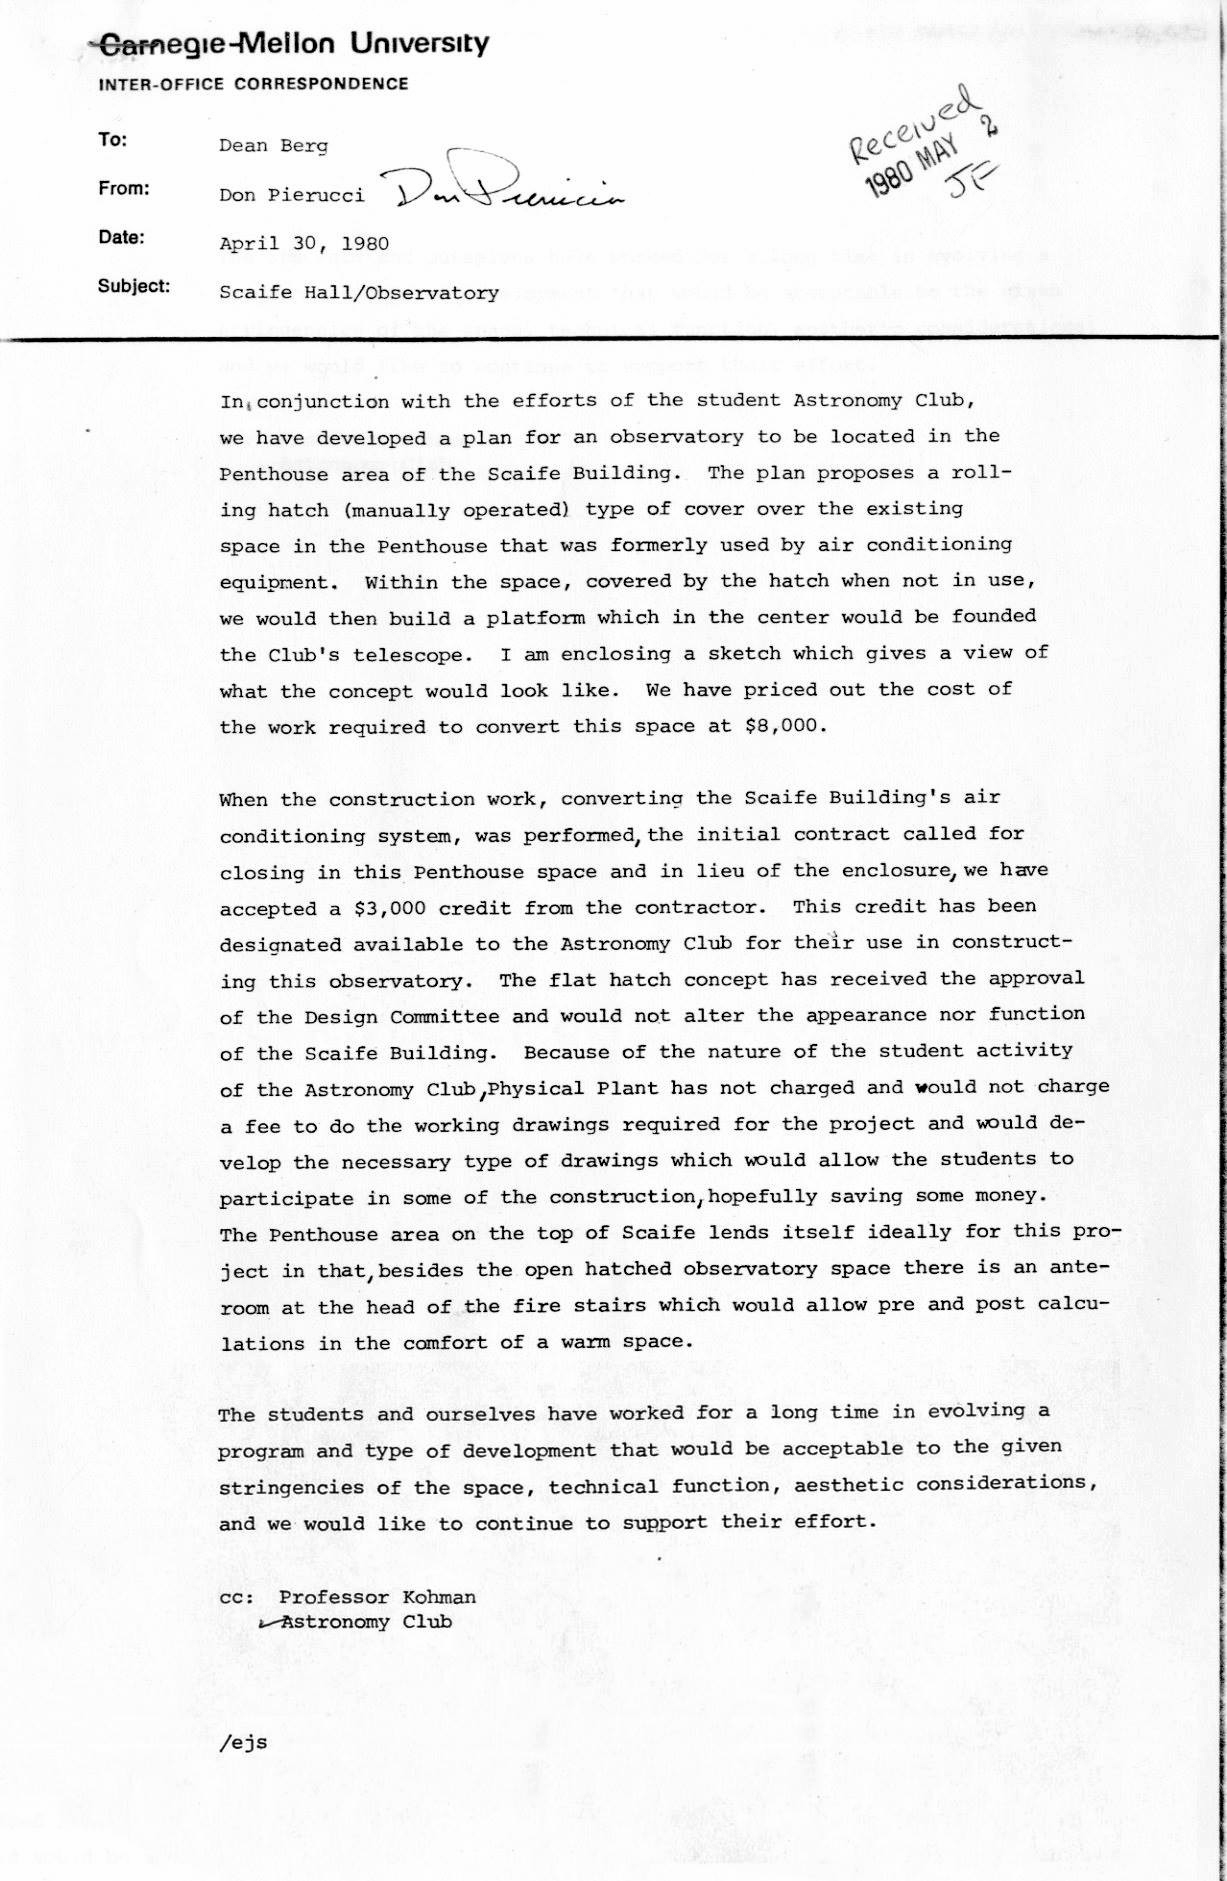 Letter detailing the observatory plans